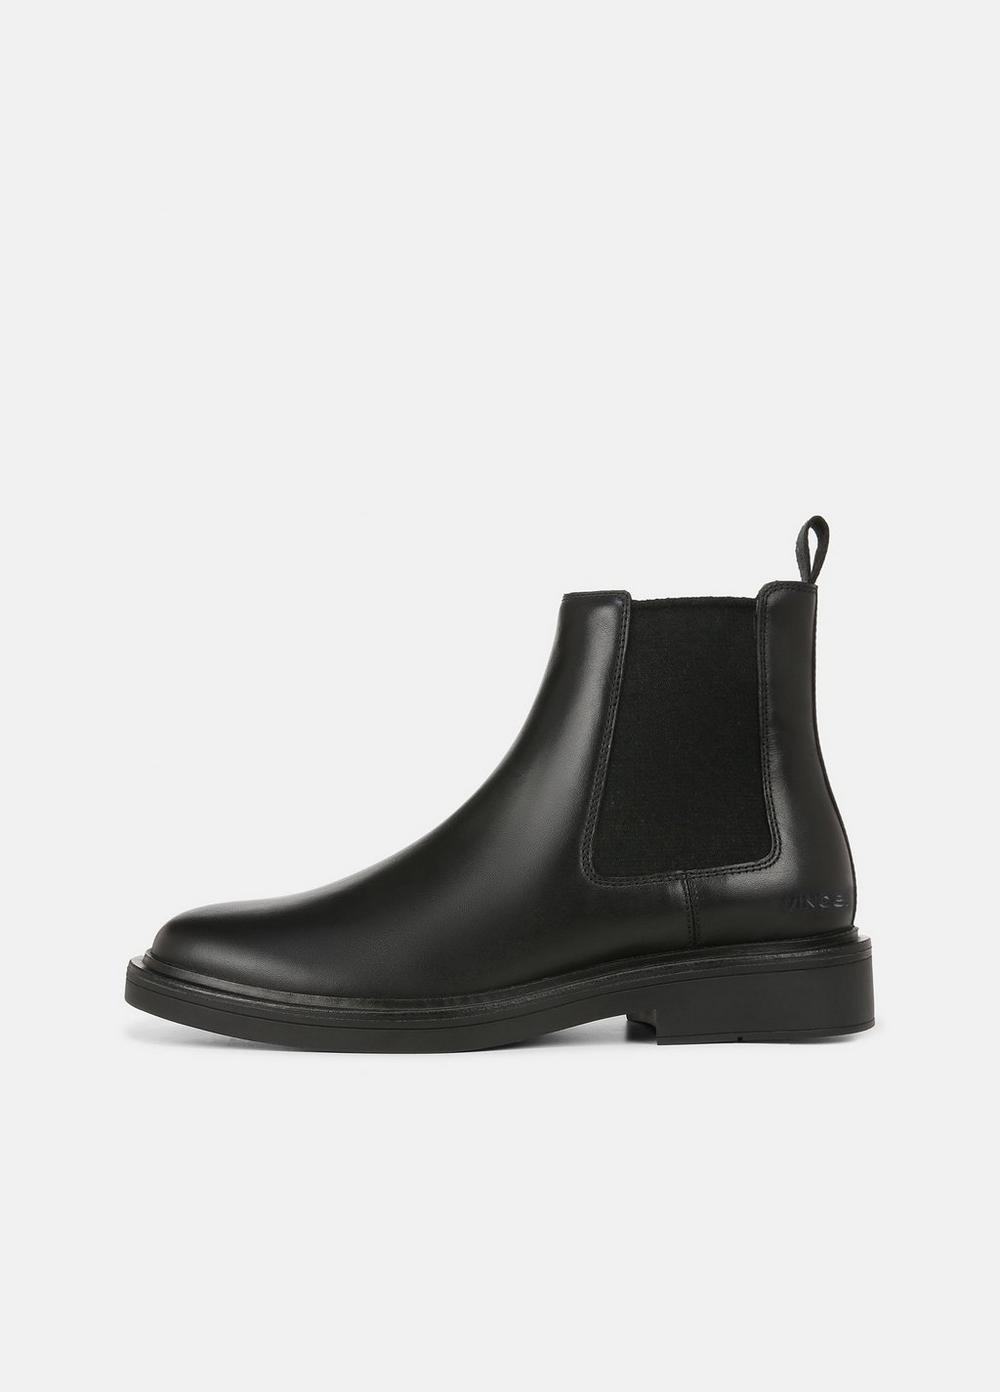 Erik Leather Chelsea Boot, Black, Size 11 Vince